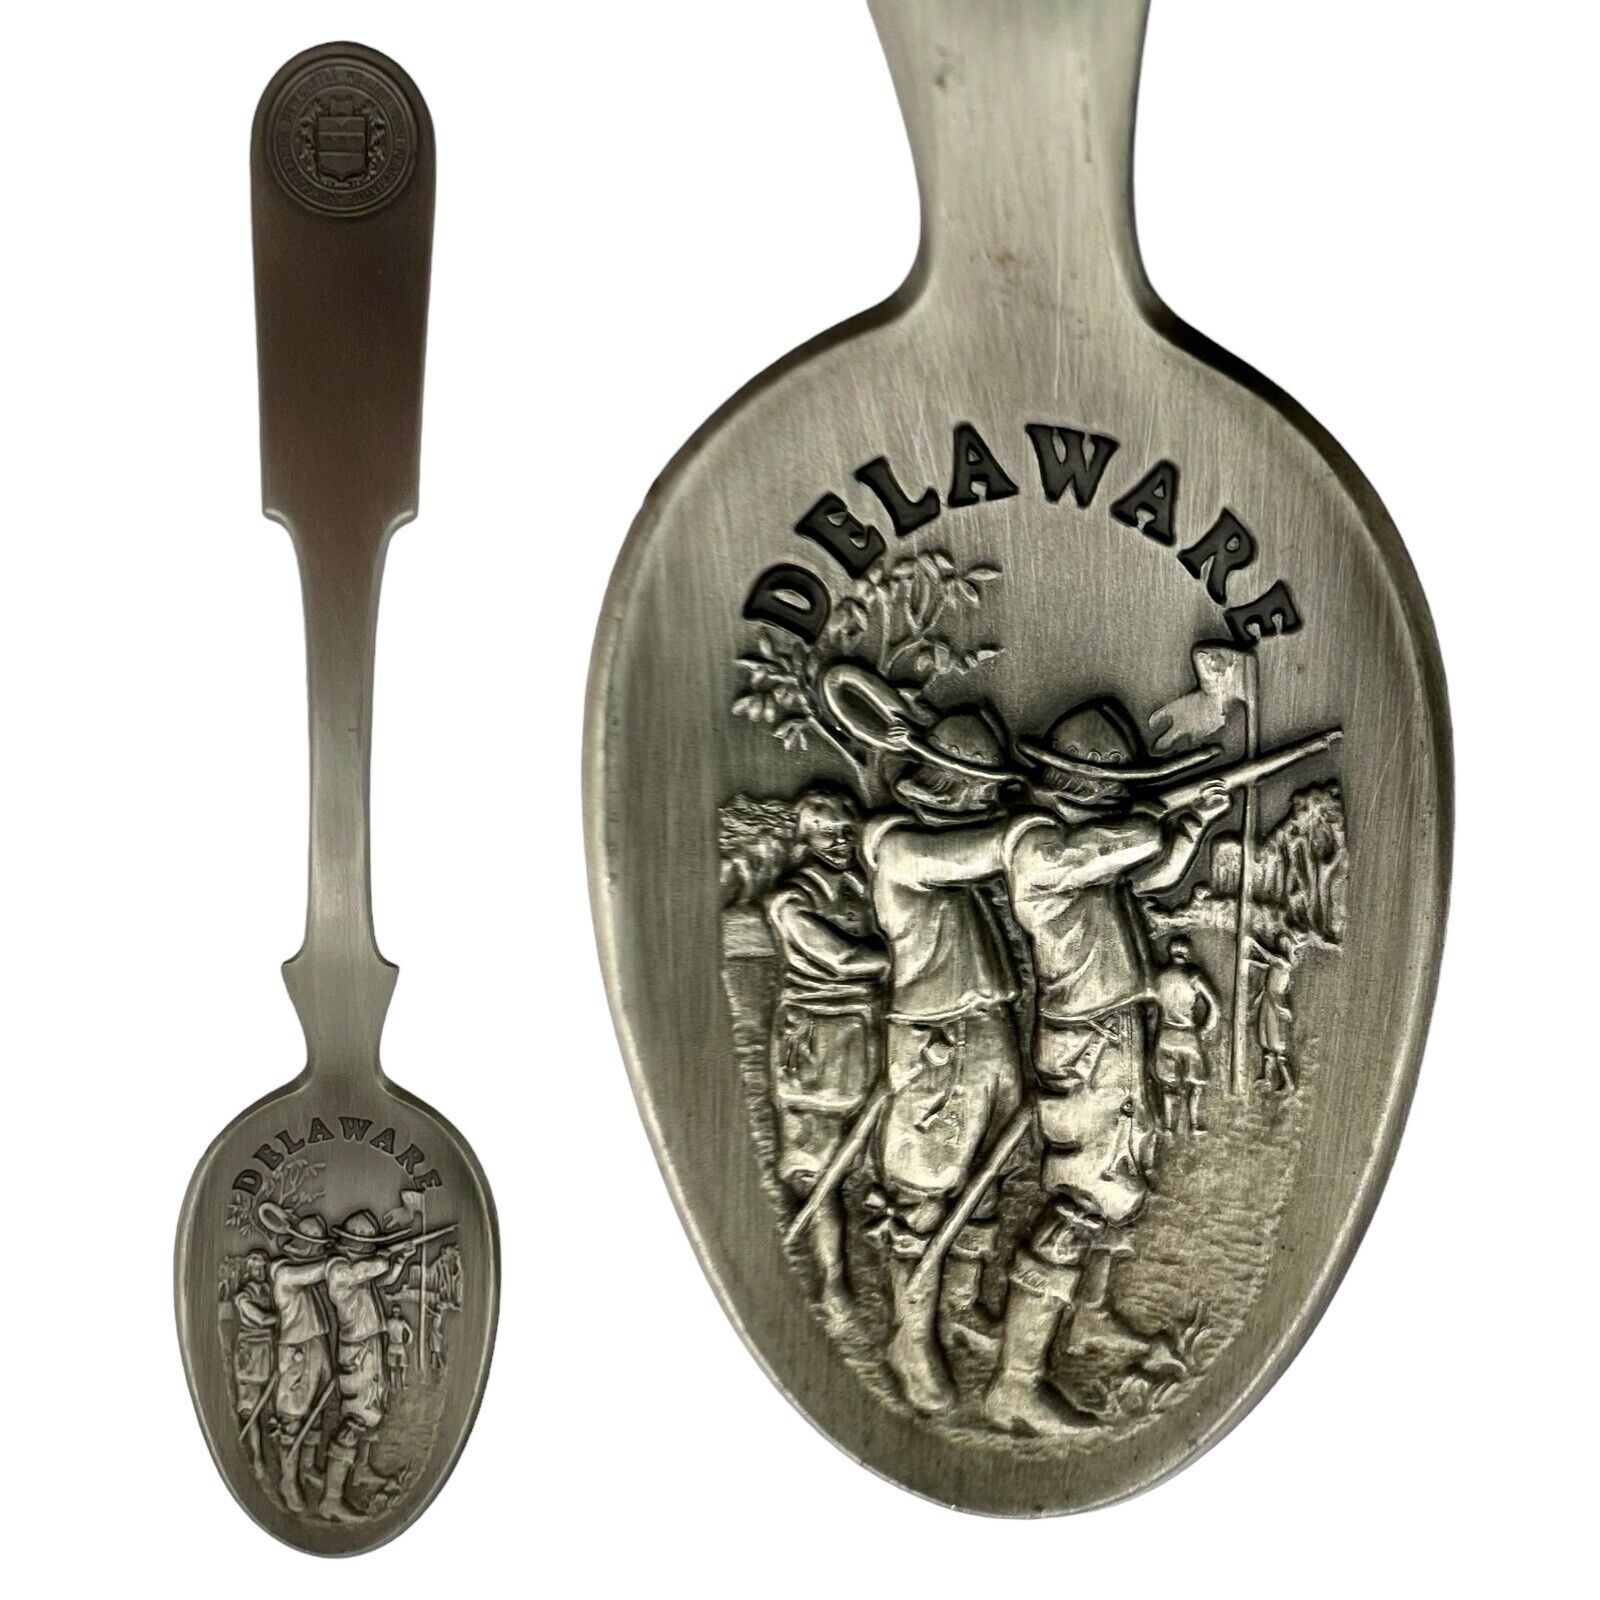 VTG 1975 Franklin Mint American Colonies Decorative Spoon DELAWARE Pewter